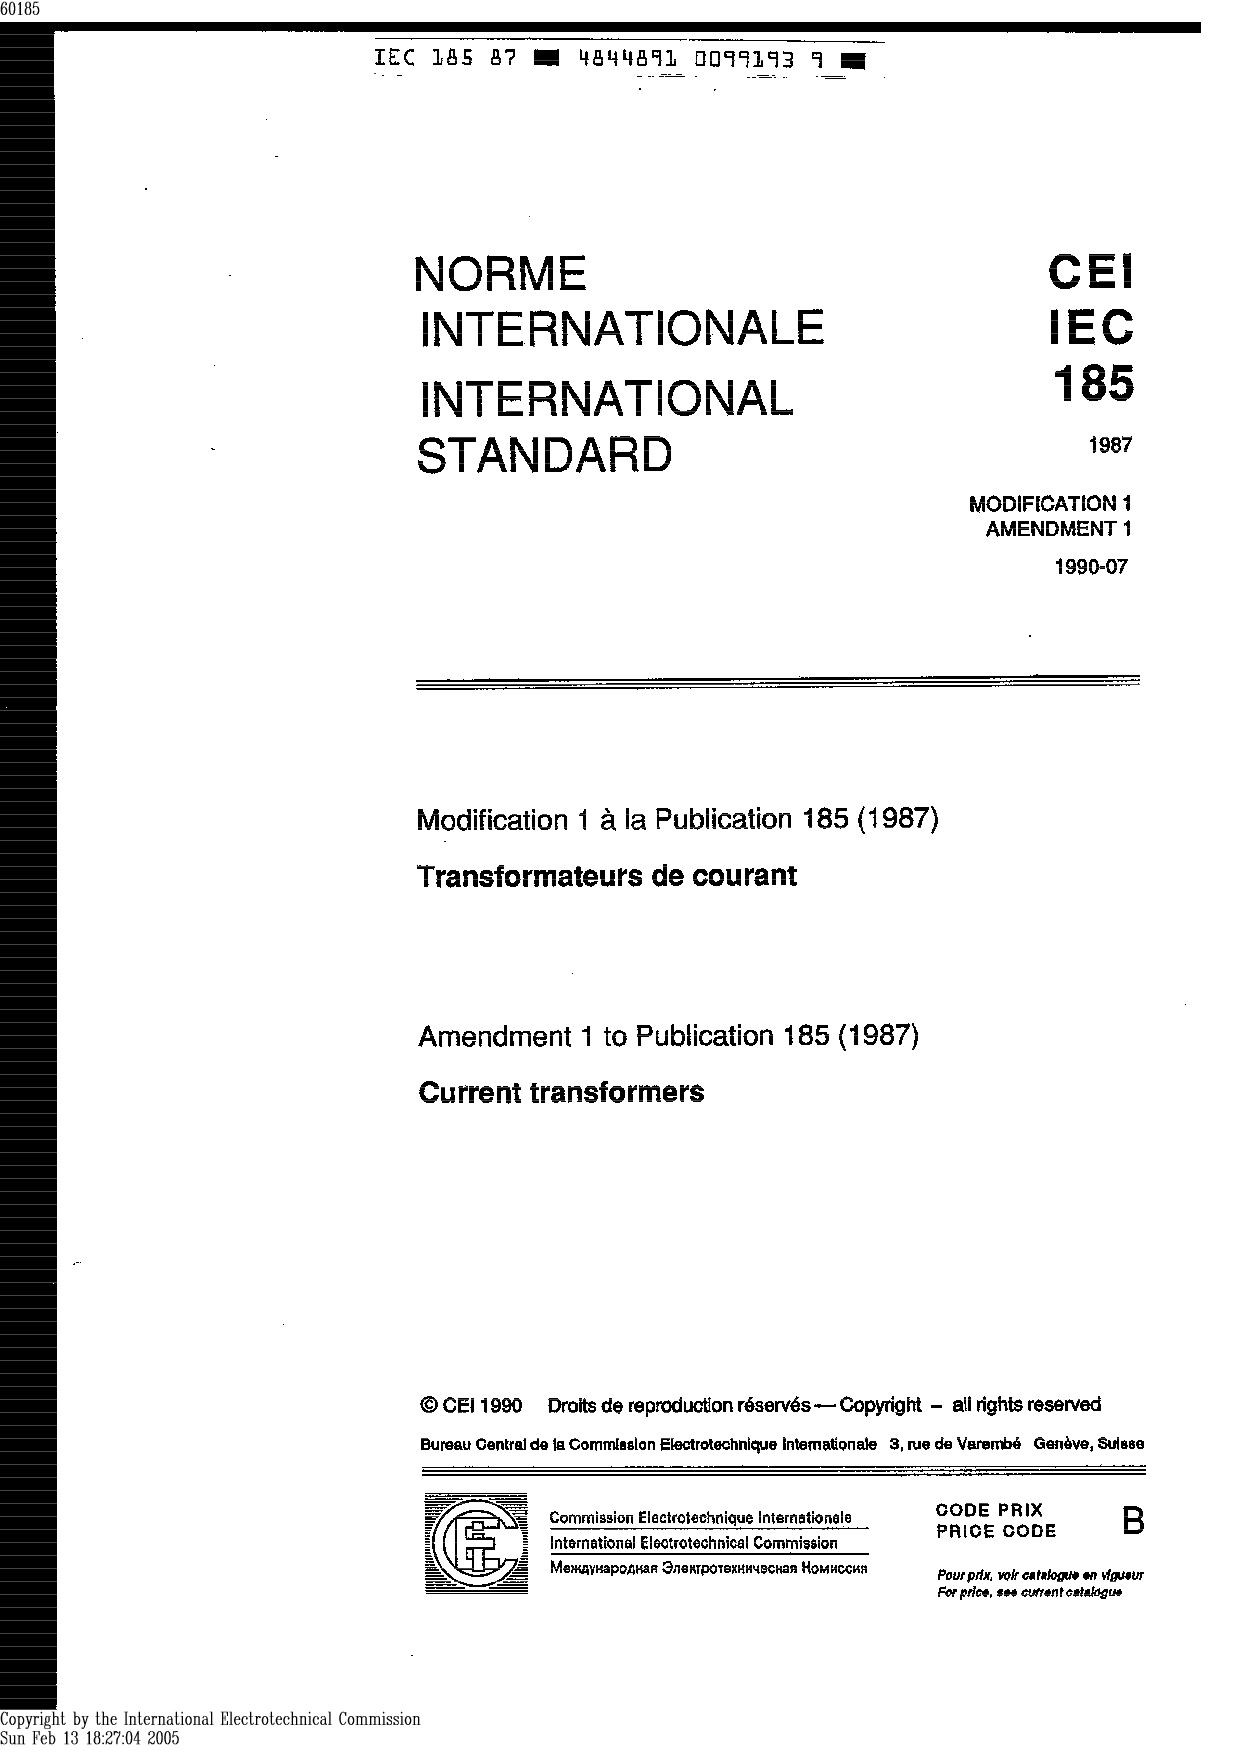 IEC 60185:1987/AMD1:1990封面图